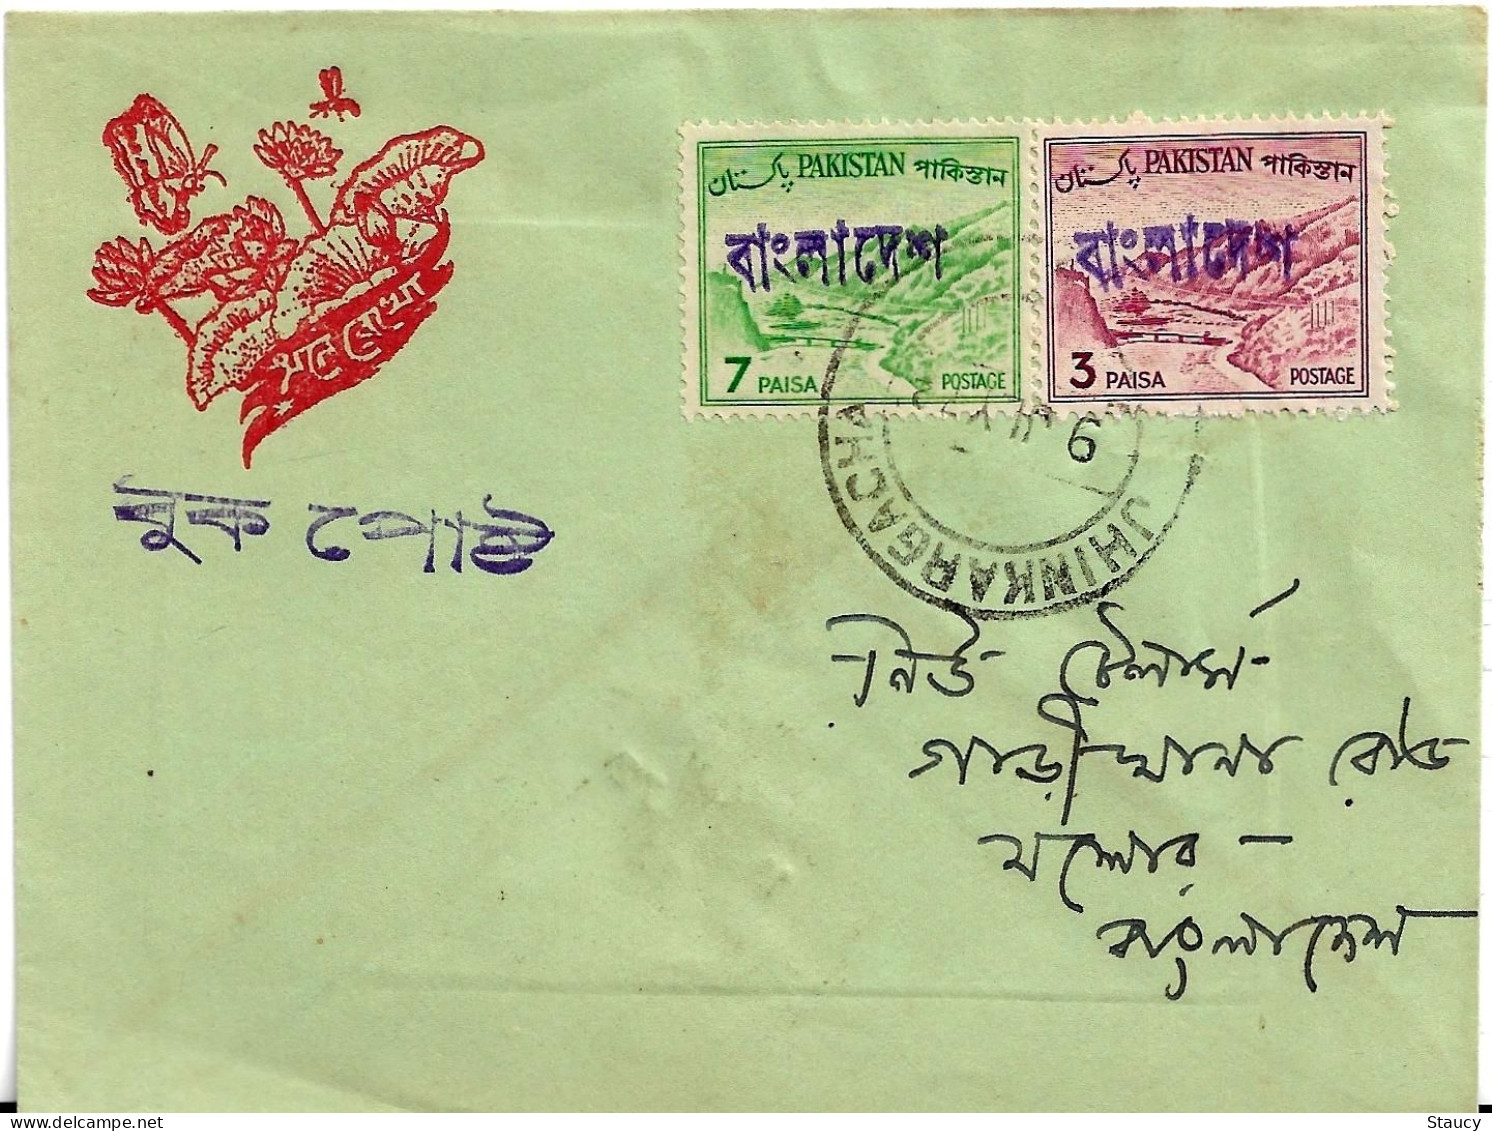 PAKISTAN BANGLADESH 1972 MULTIPLE Overprint On Pakistan Stamps FRANKING COVER "JHINKARGACHA" Cancellation As Per Scan - Pakistan